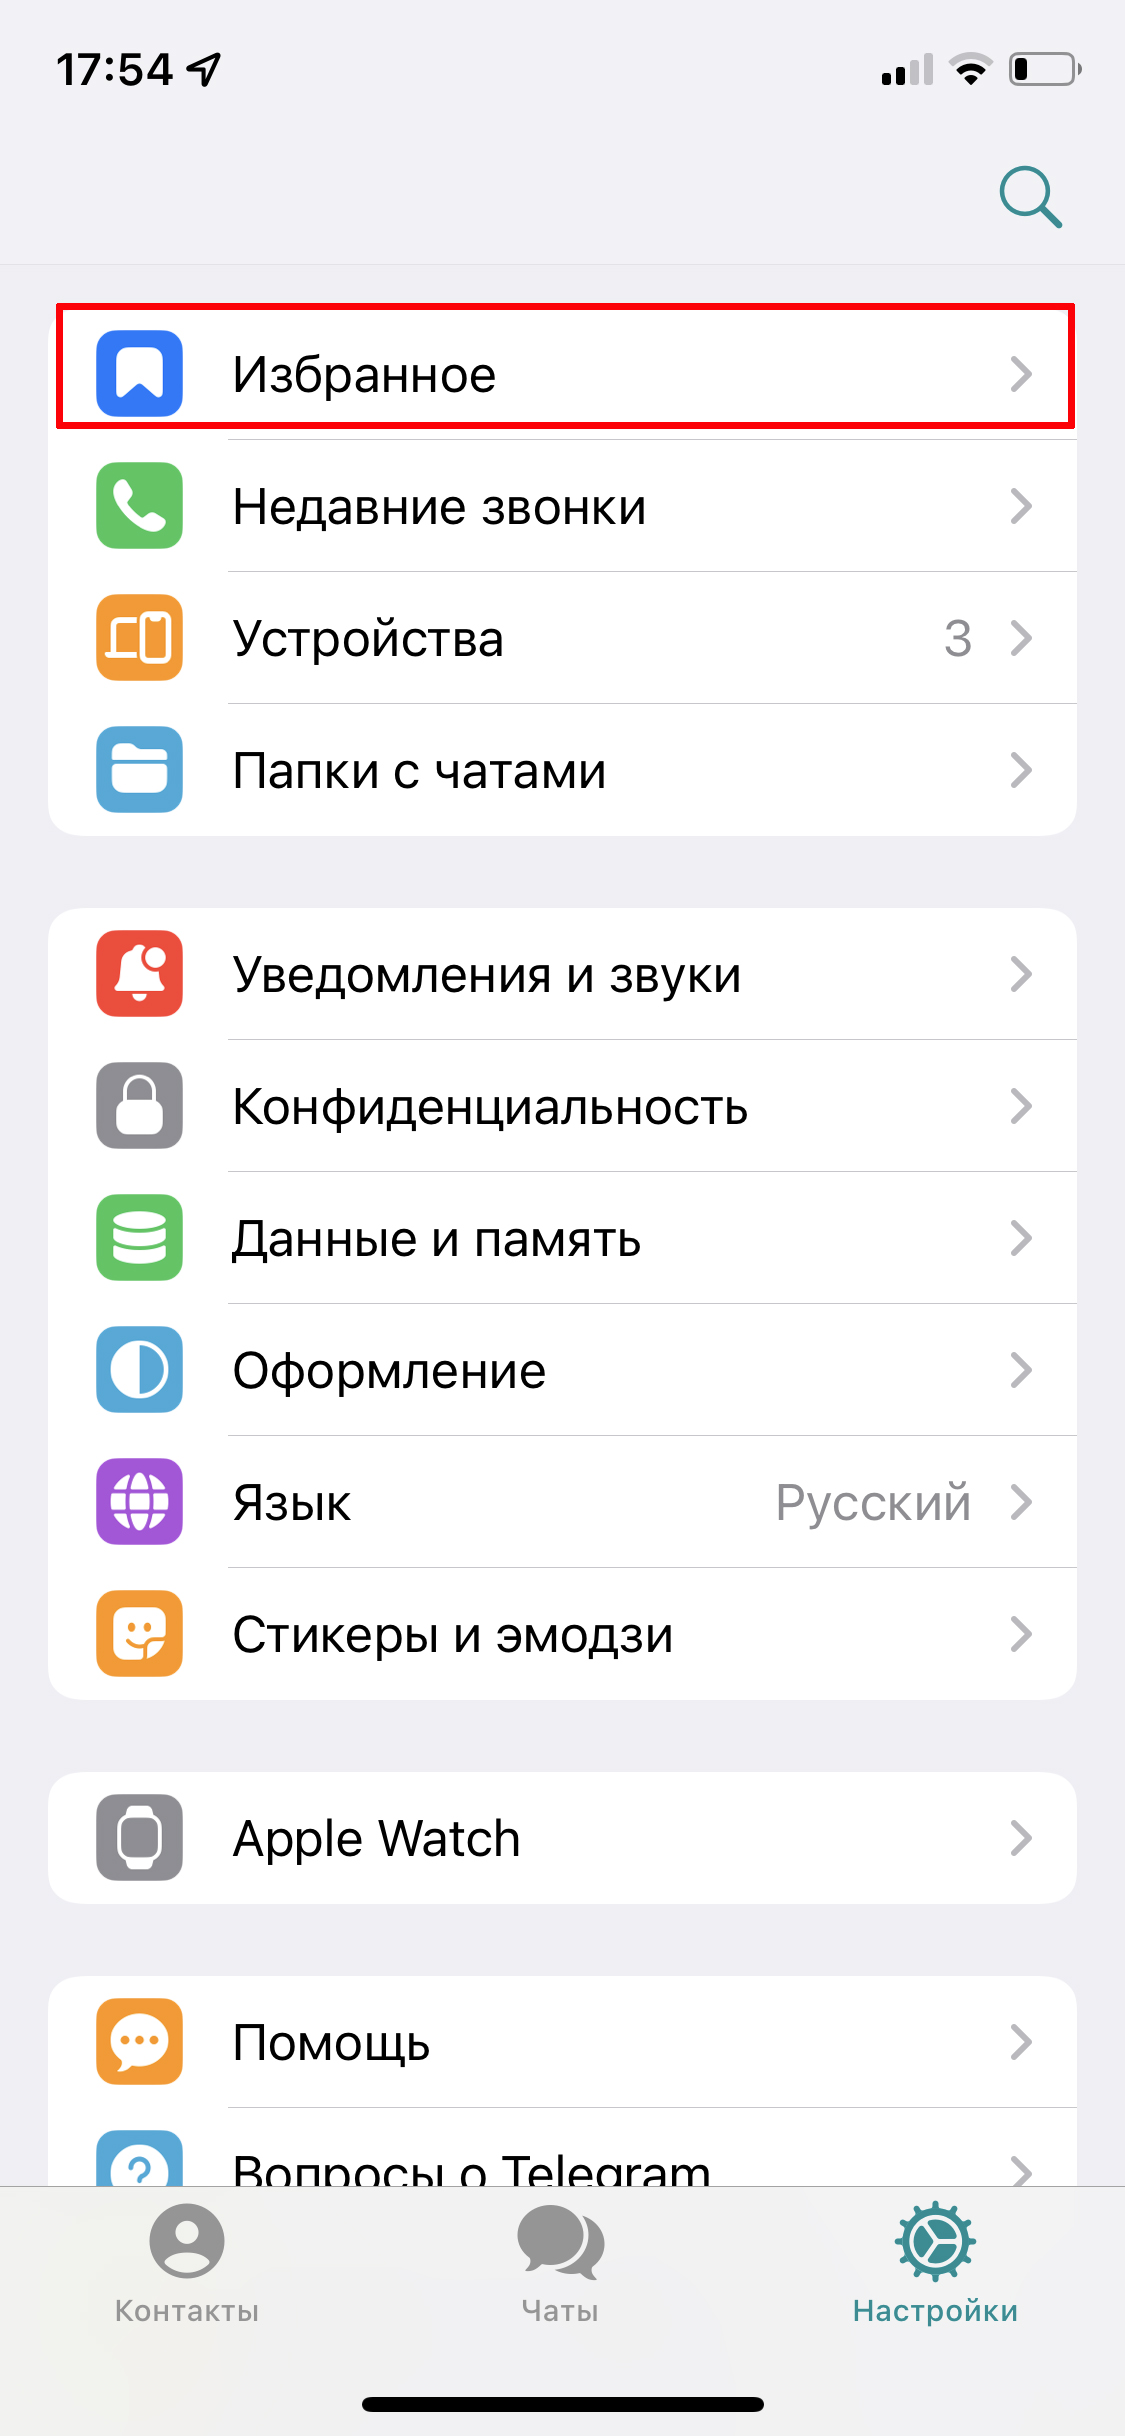 Как телеграмма перевести на русский язык андроиде фото 98